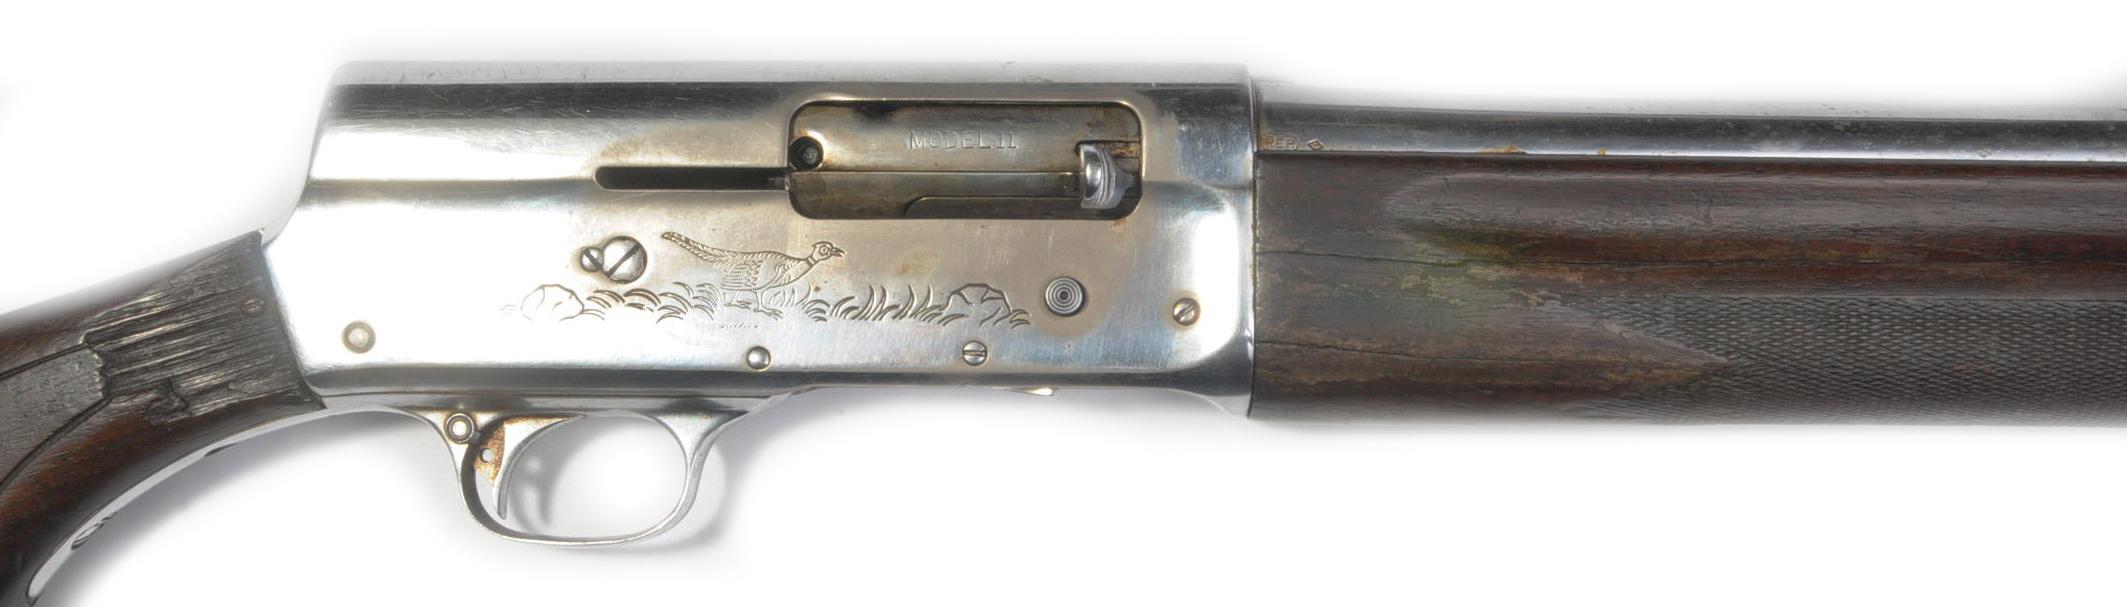 Remington Model 11 12 GA semi auto shotgun.  FFL # 430277 (DHR 1)